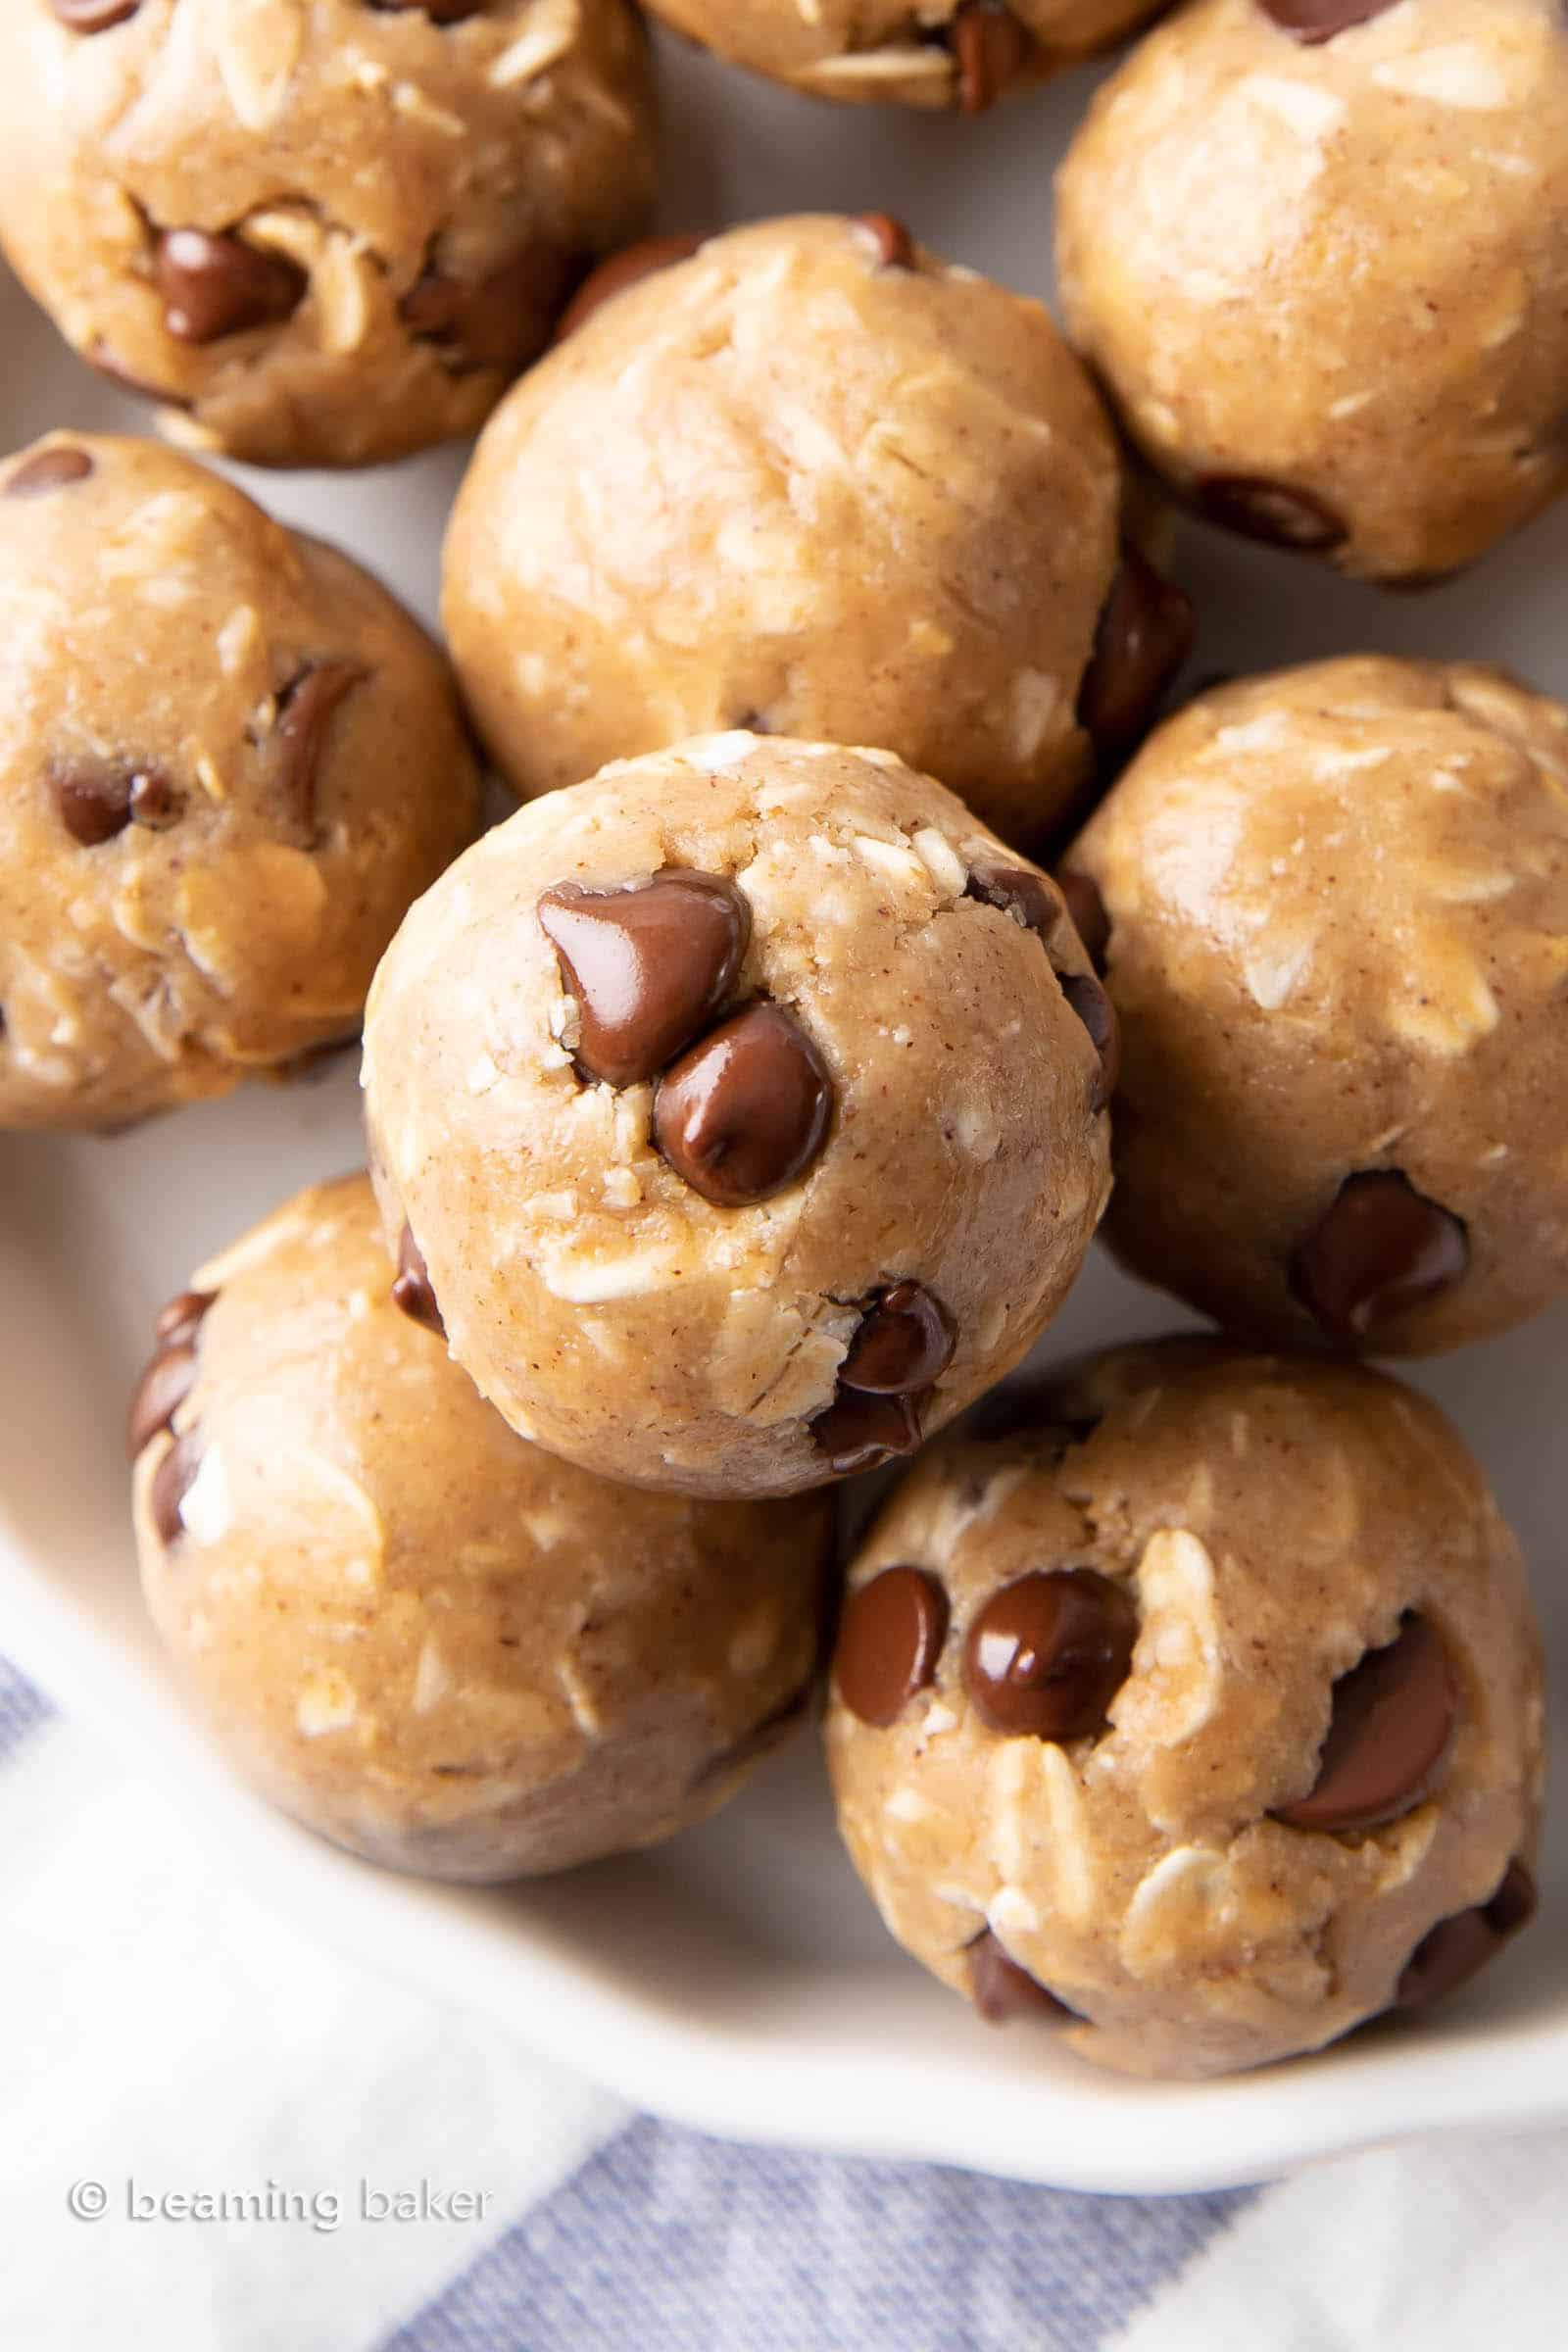 Oatmeal Cookie Energy Balls Recipe: a 5 ingredient recipe for healthy oatmeal energy balls packed with nutrients! Easy to make, Vegan, Gluten Free, Refined Sugar-Free. #EnergyBalls #Vegan #GlutenFree #Healthy | Recipe at BeamingBaker.com